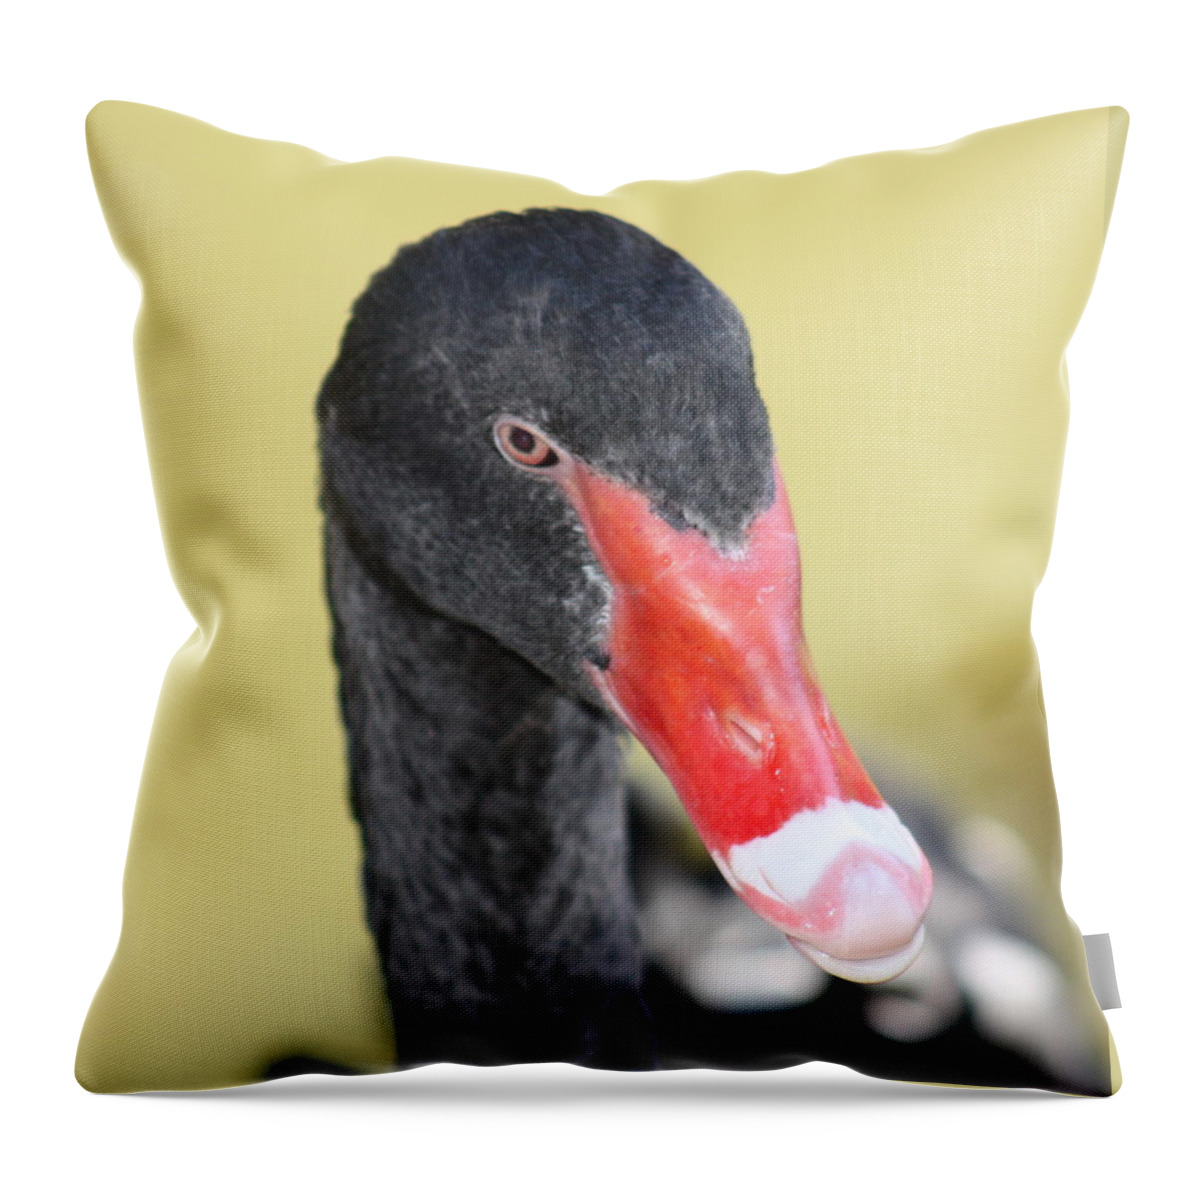 Black Throw Pillow featuring the photograph Black Swan by Kim Galluzzo Wozniak